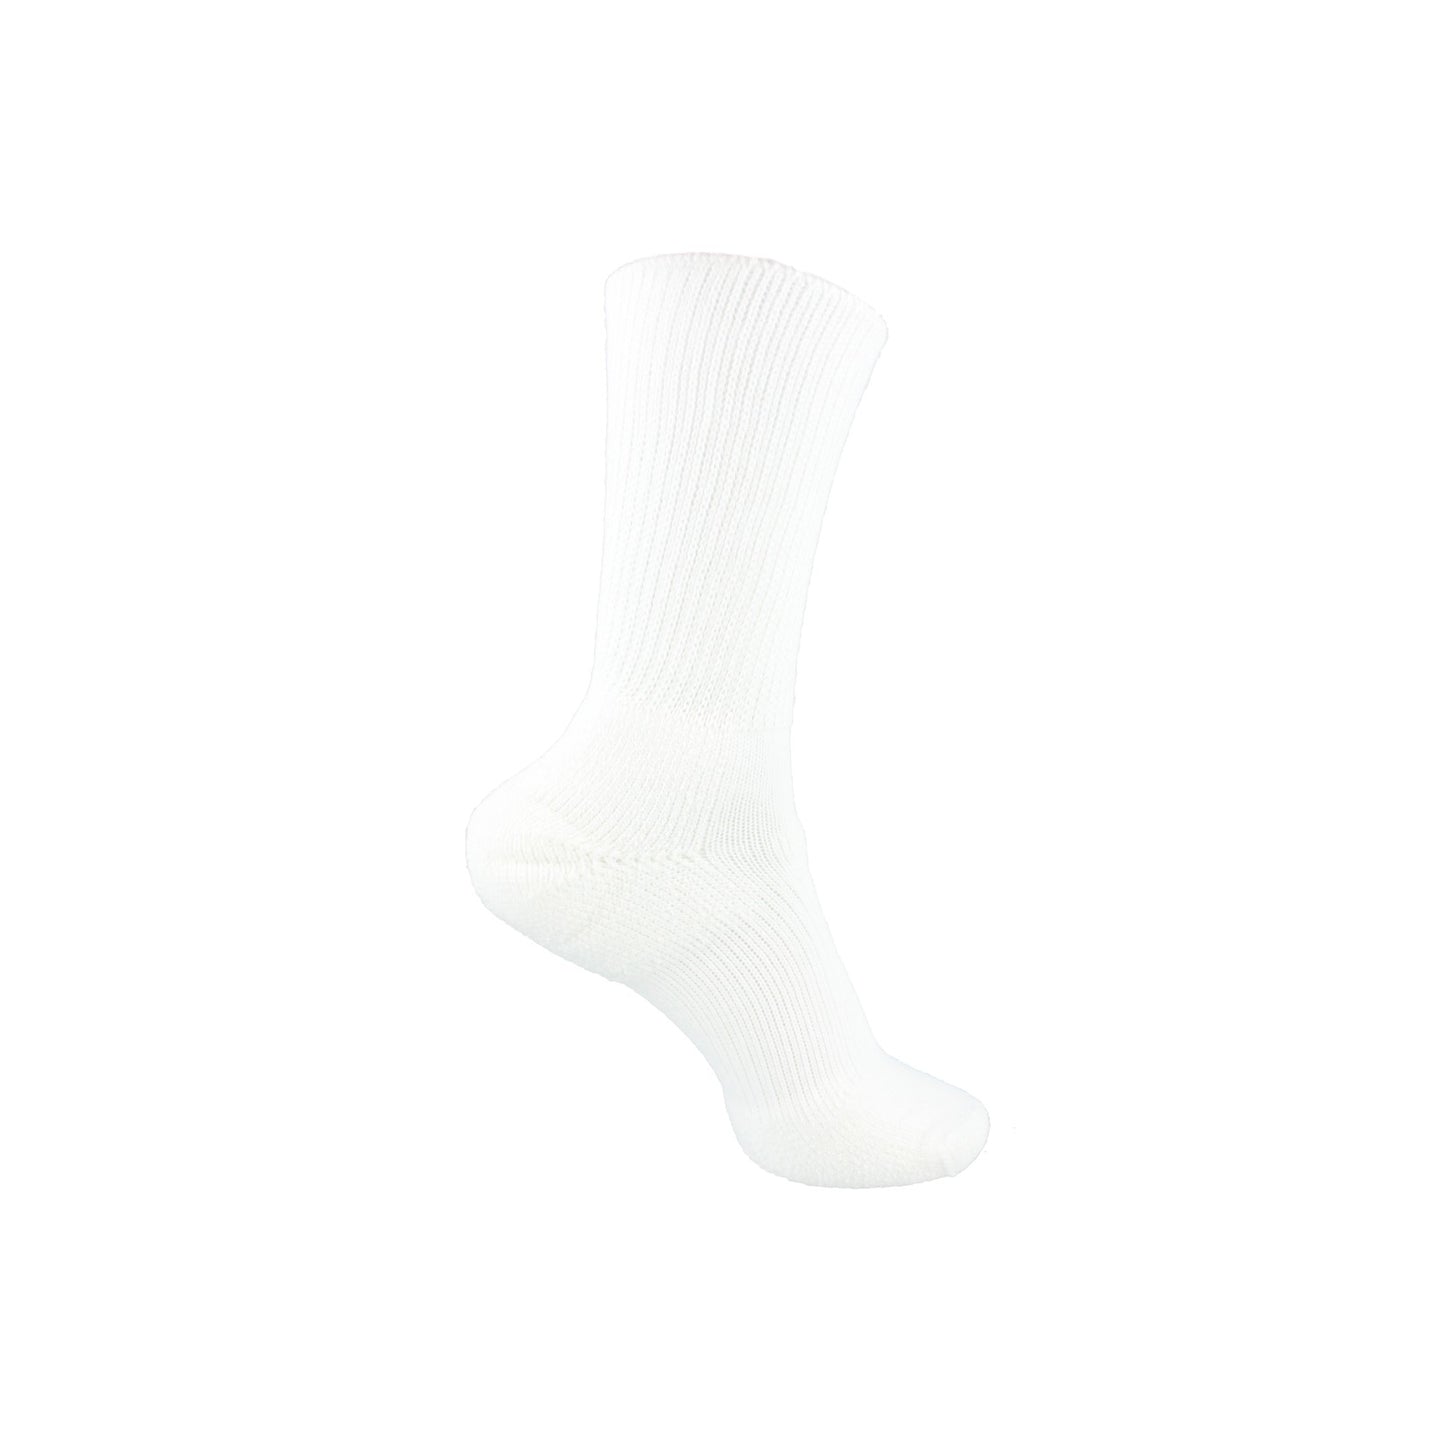 Peltz Shoes  Men's Thorlo Walking Socks - Large - 1 Pack White WX-13 004